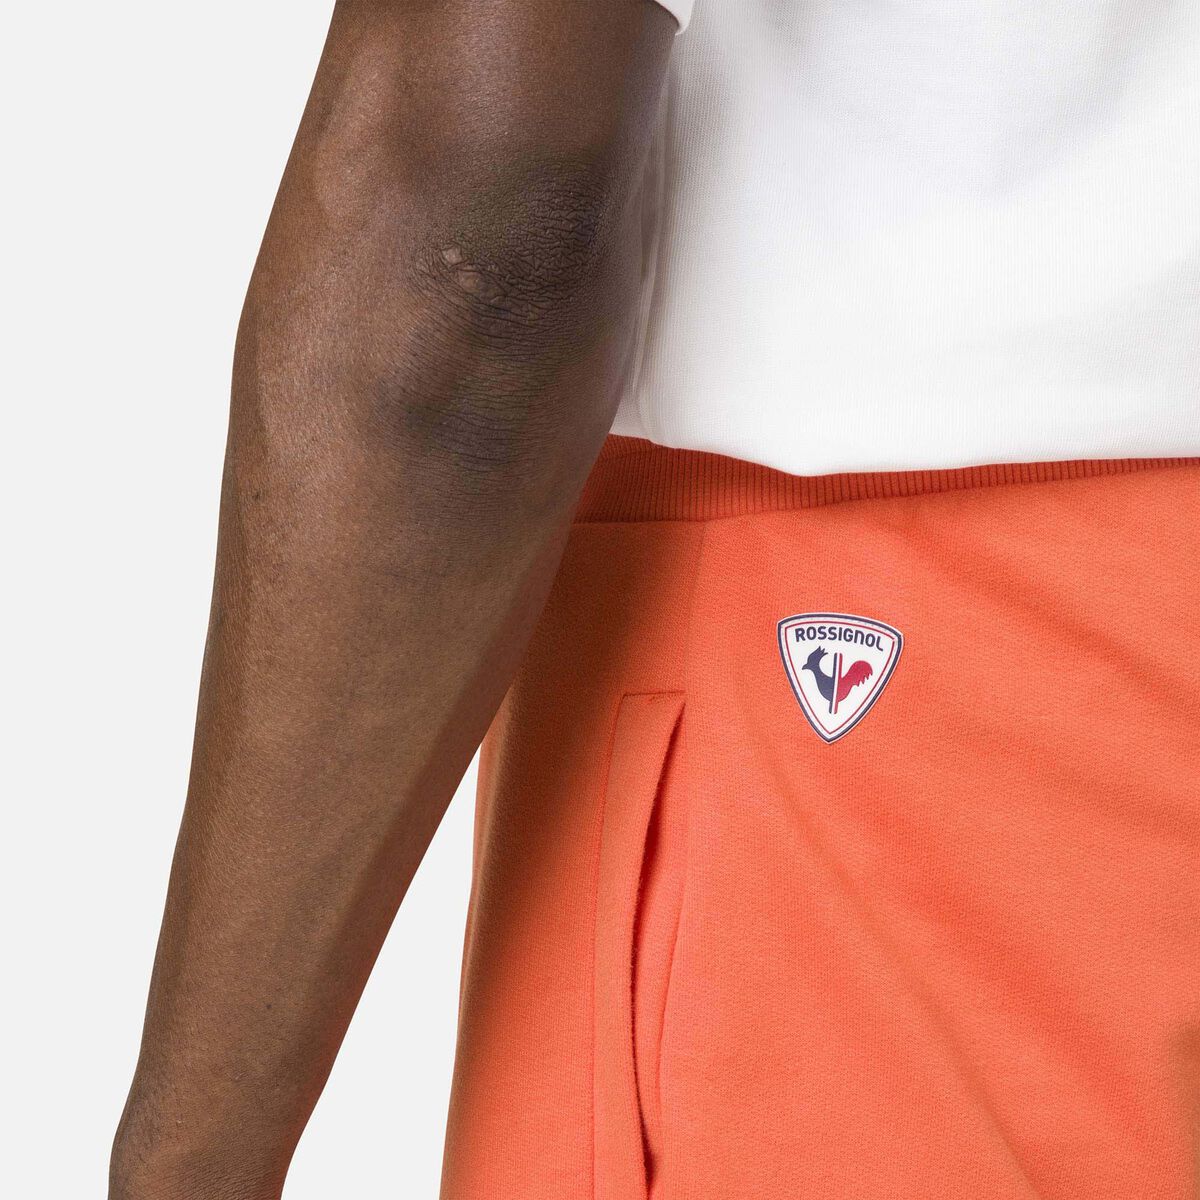 Rossignol Men's logo cotton shorts orange